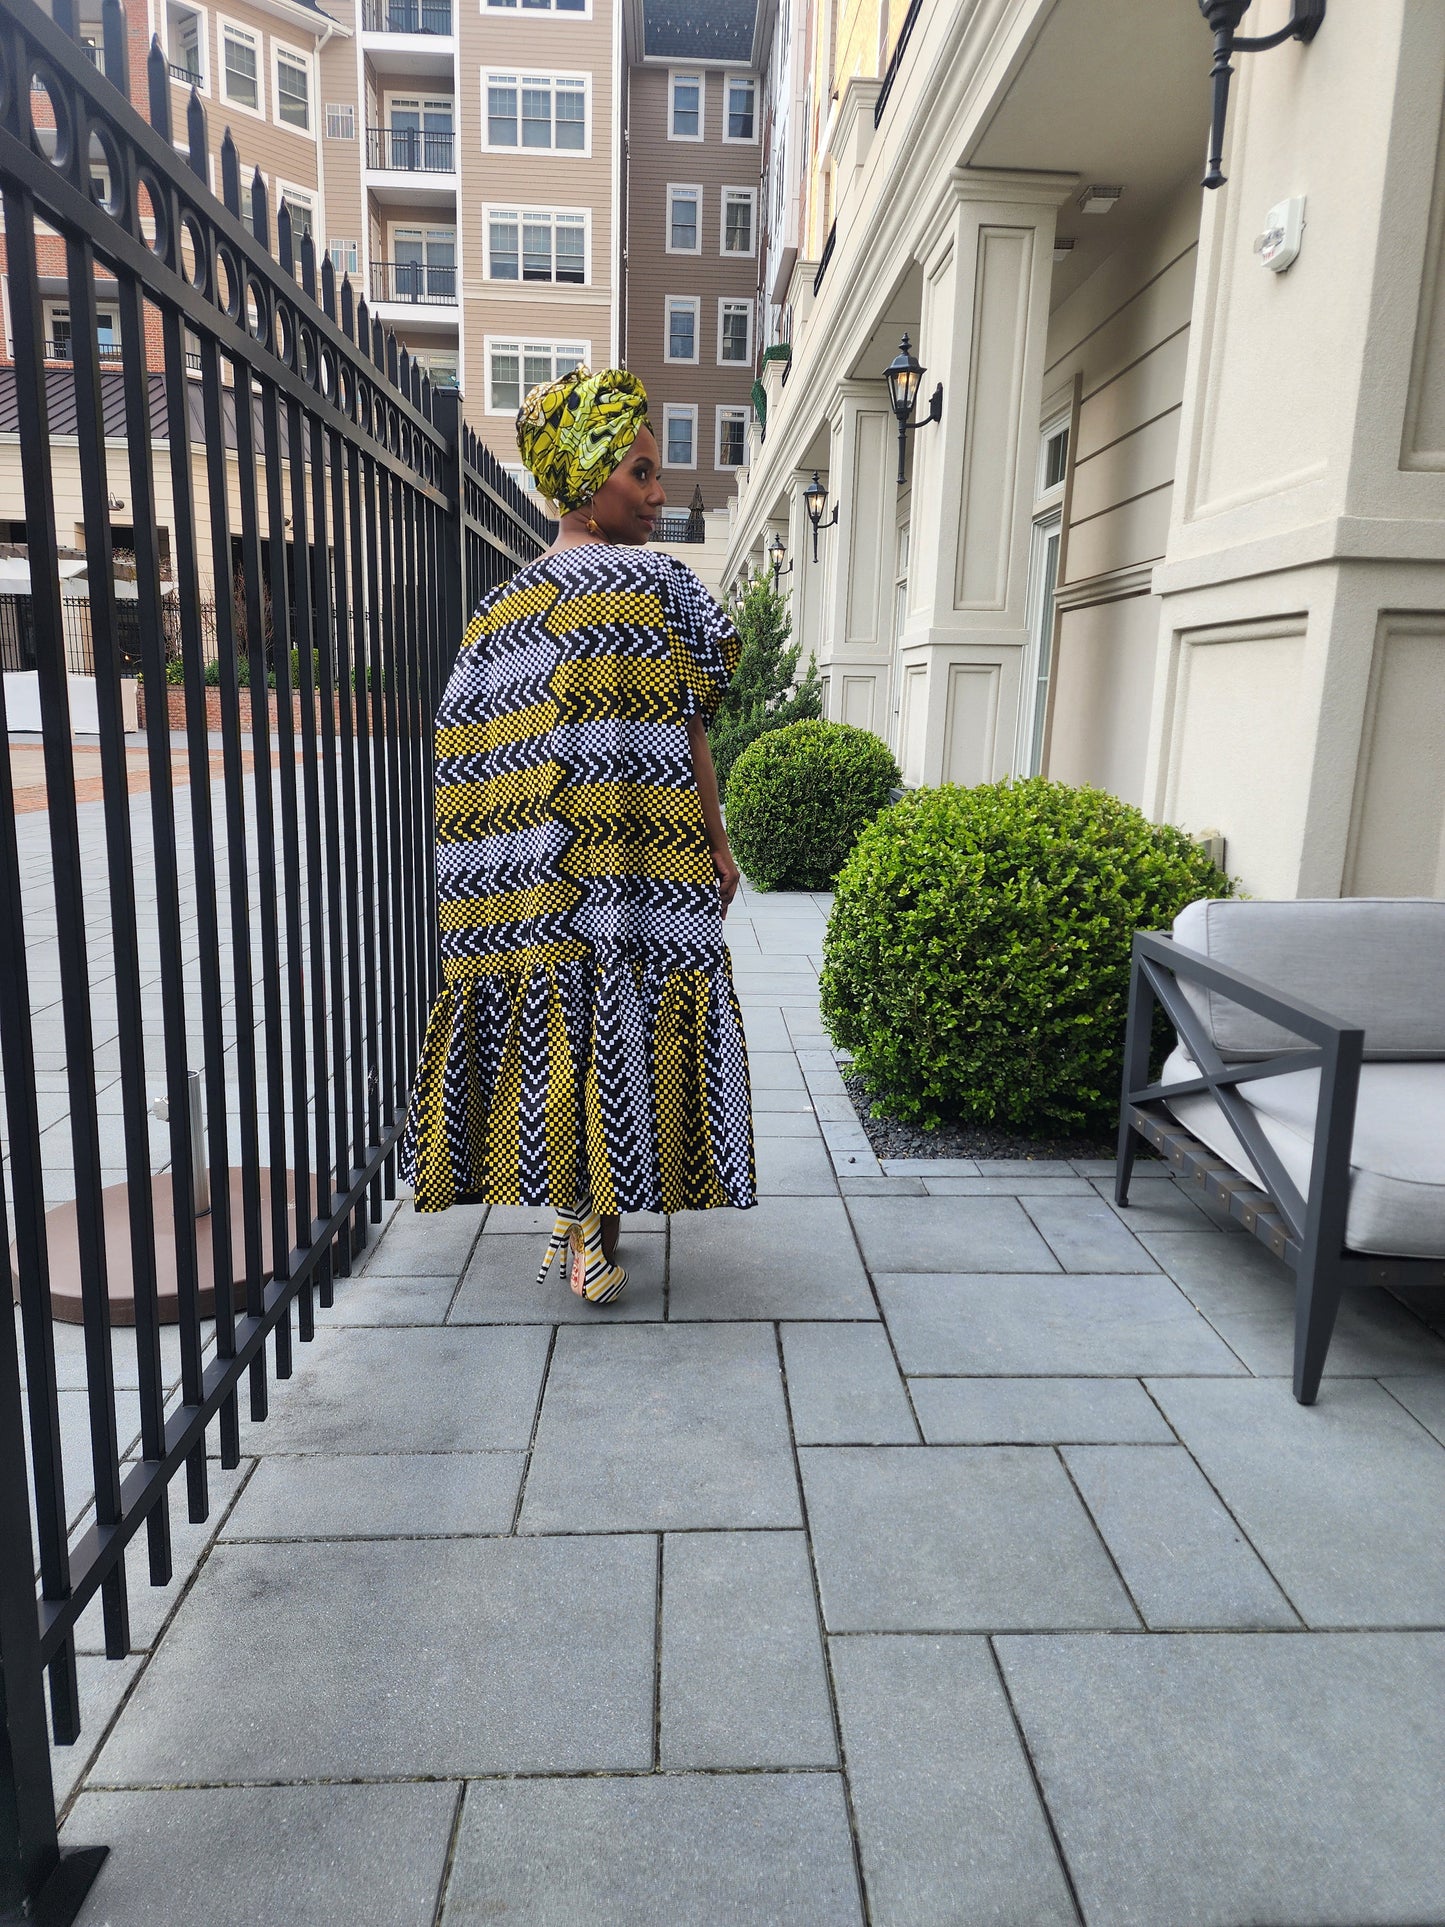 FUNIKA Duster, Yellow, White and Black African Print Duster, African Print Kimono, African Dress for Women